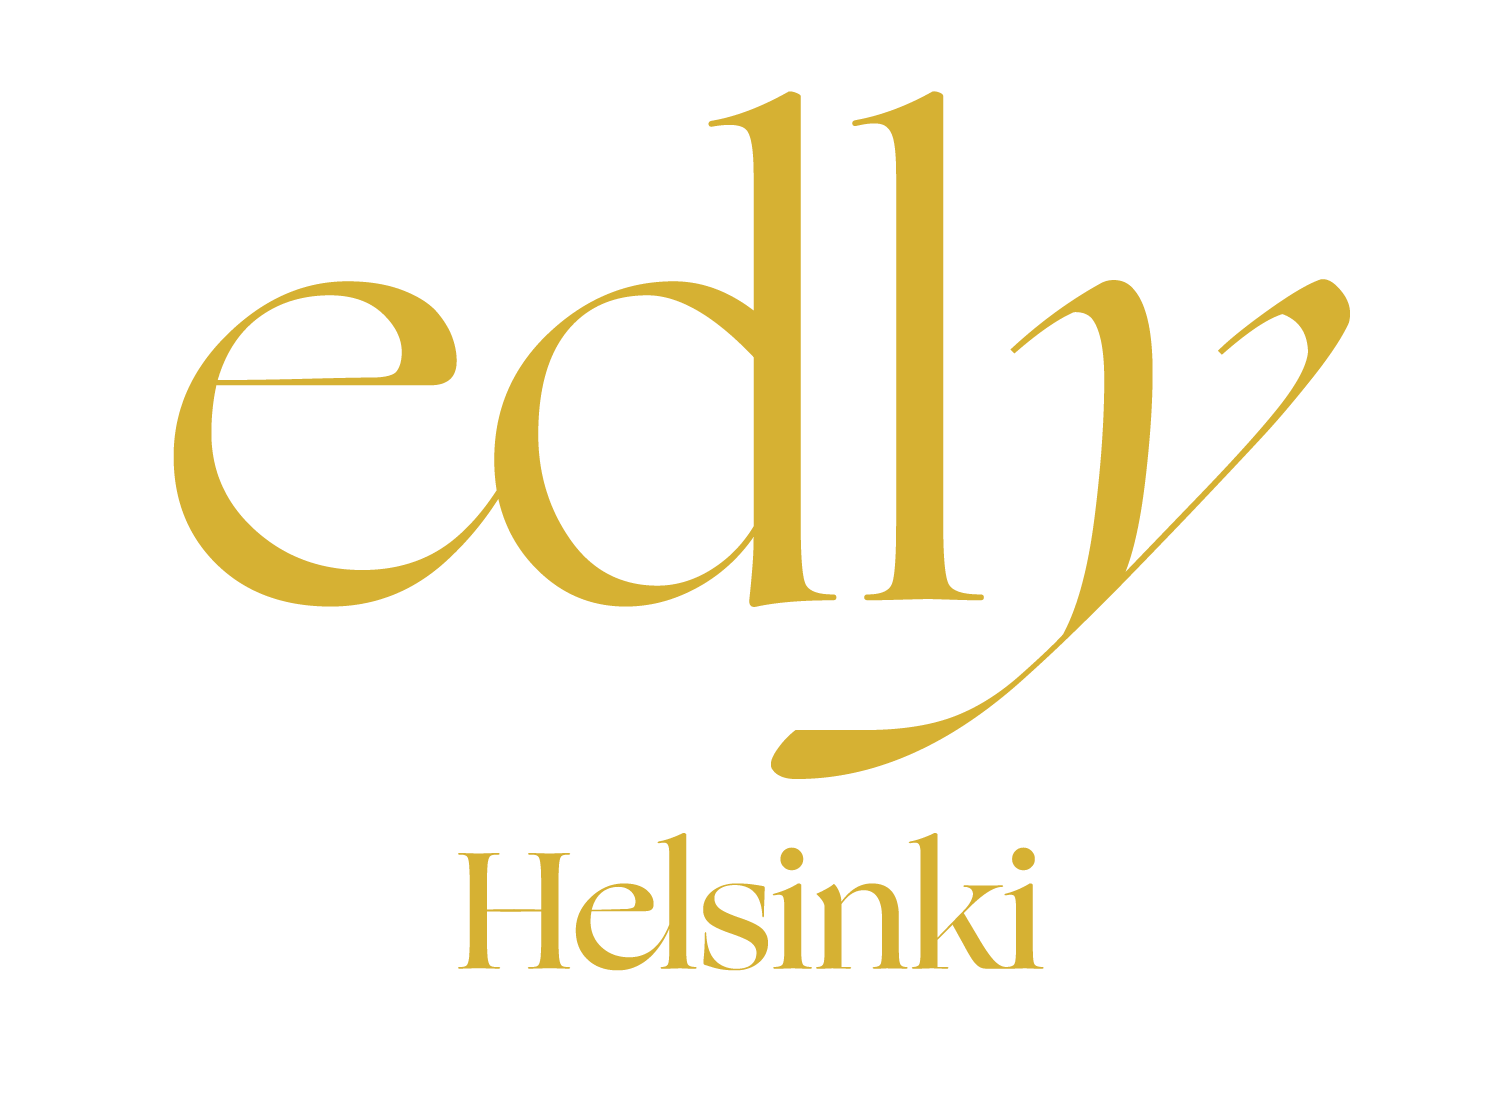 Edly Helsinki